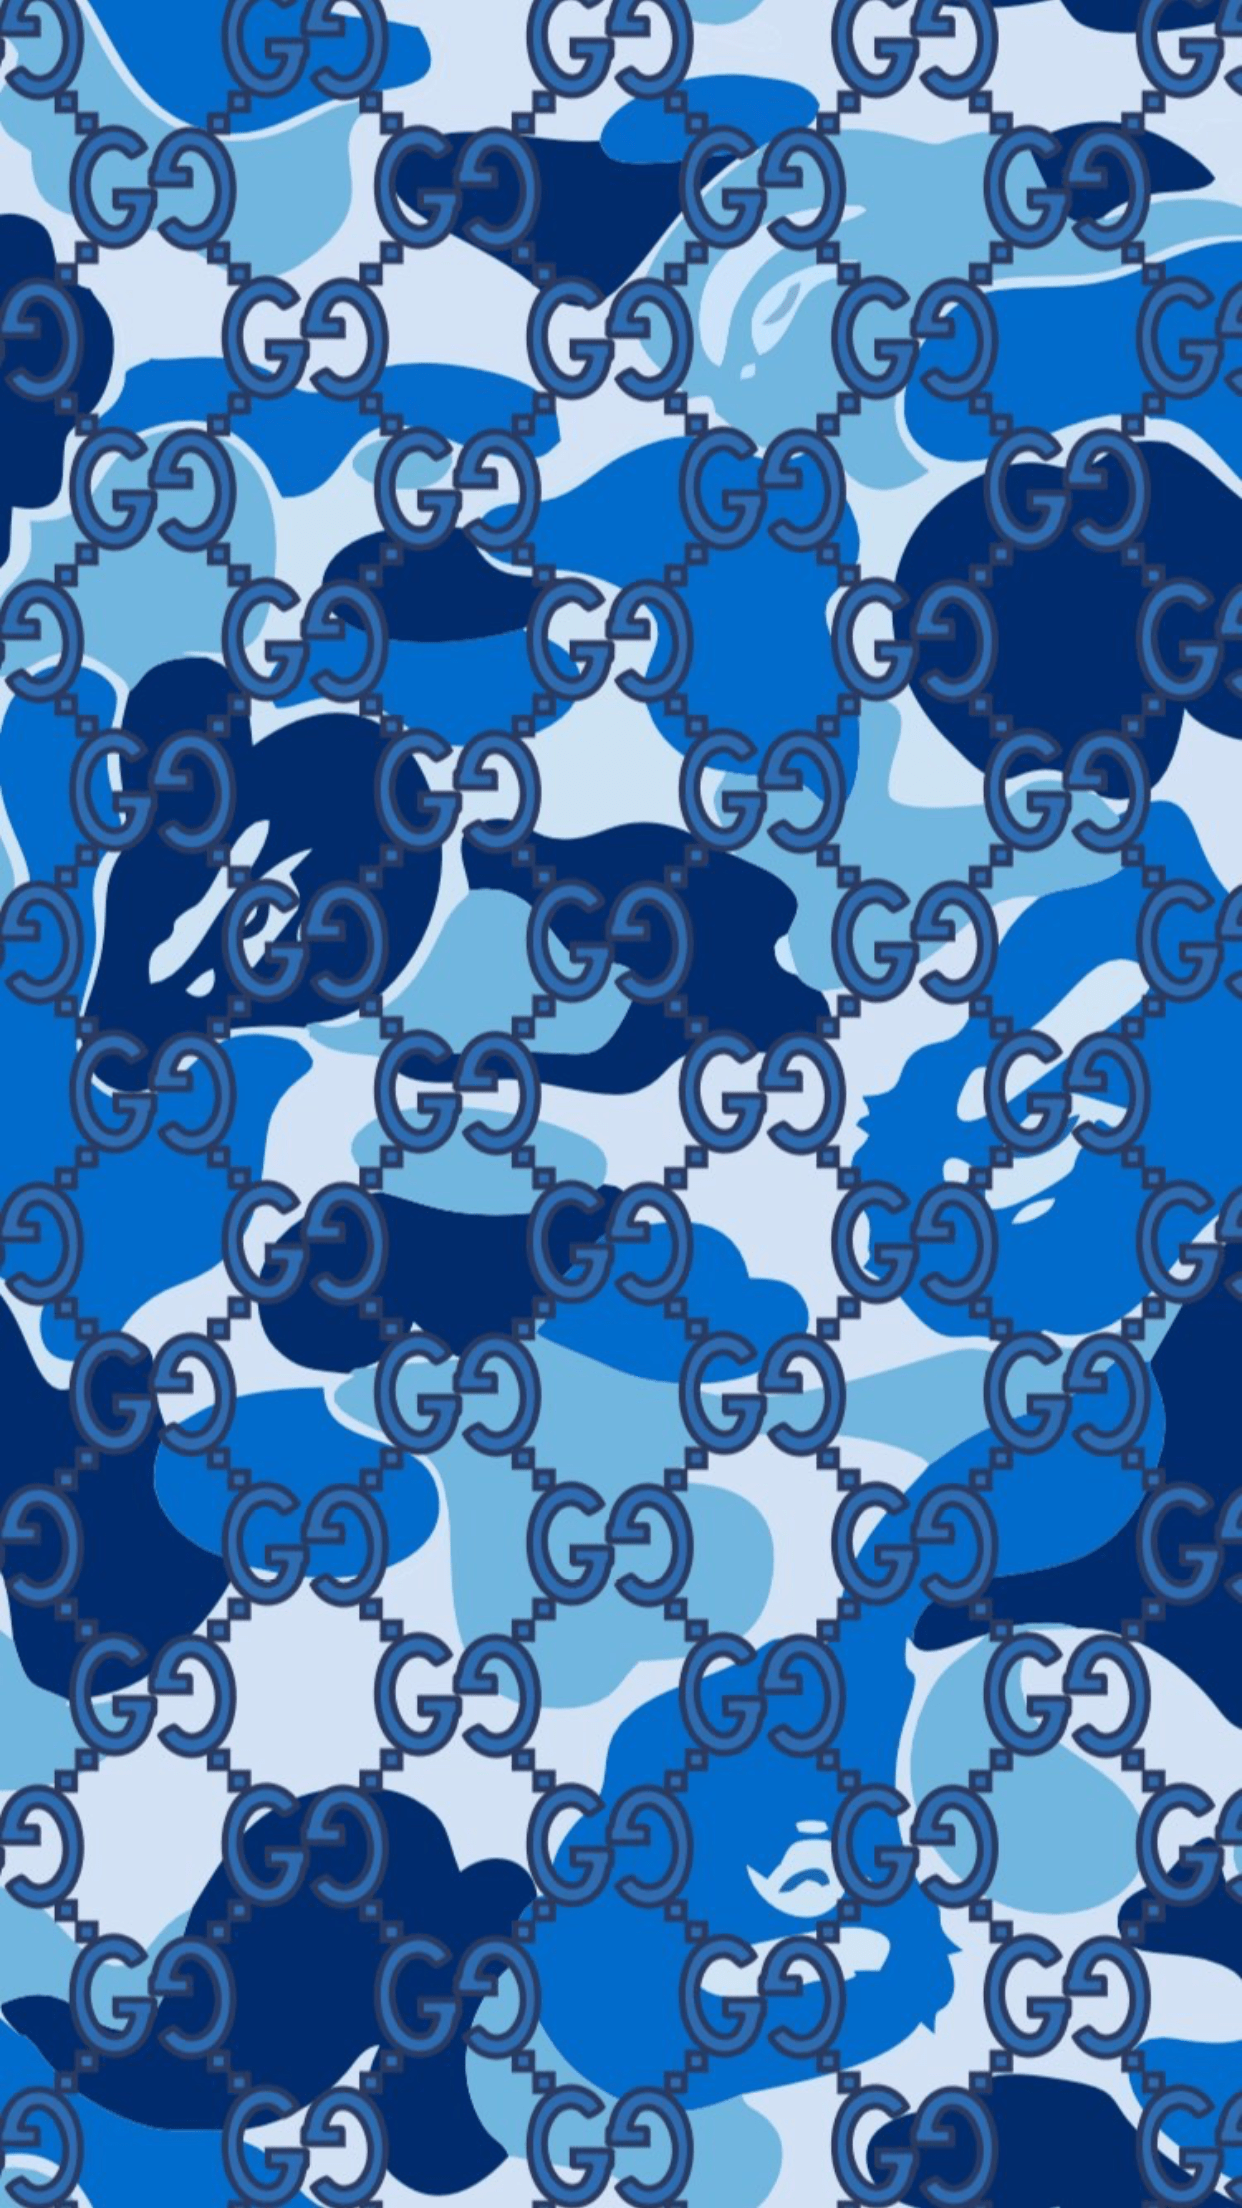 GUCCI BLUE CAMO WALLPAPER. Blue aesthetic pastel, Camo wallpaper, Picture collage wall